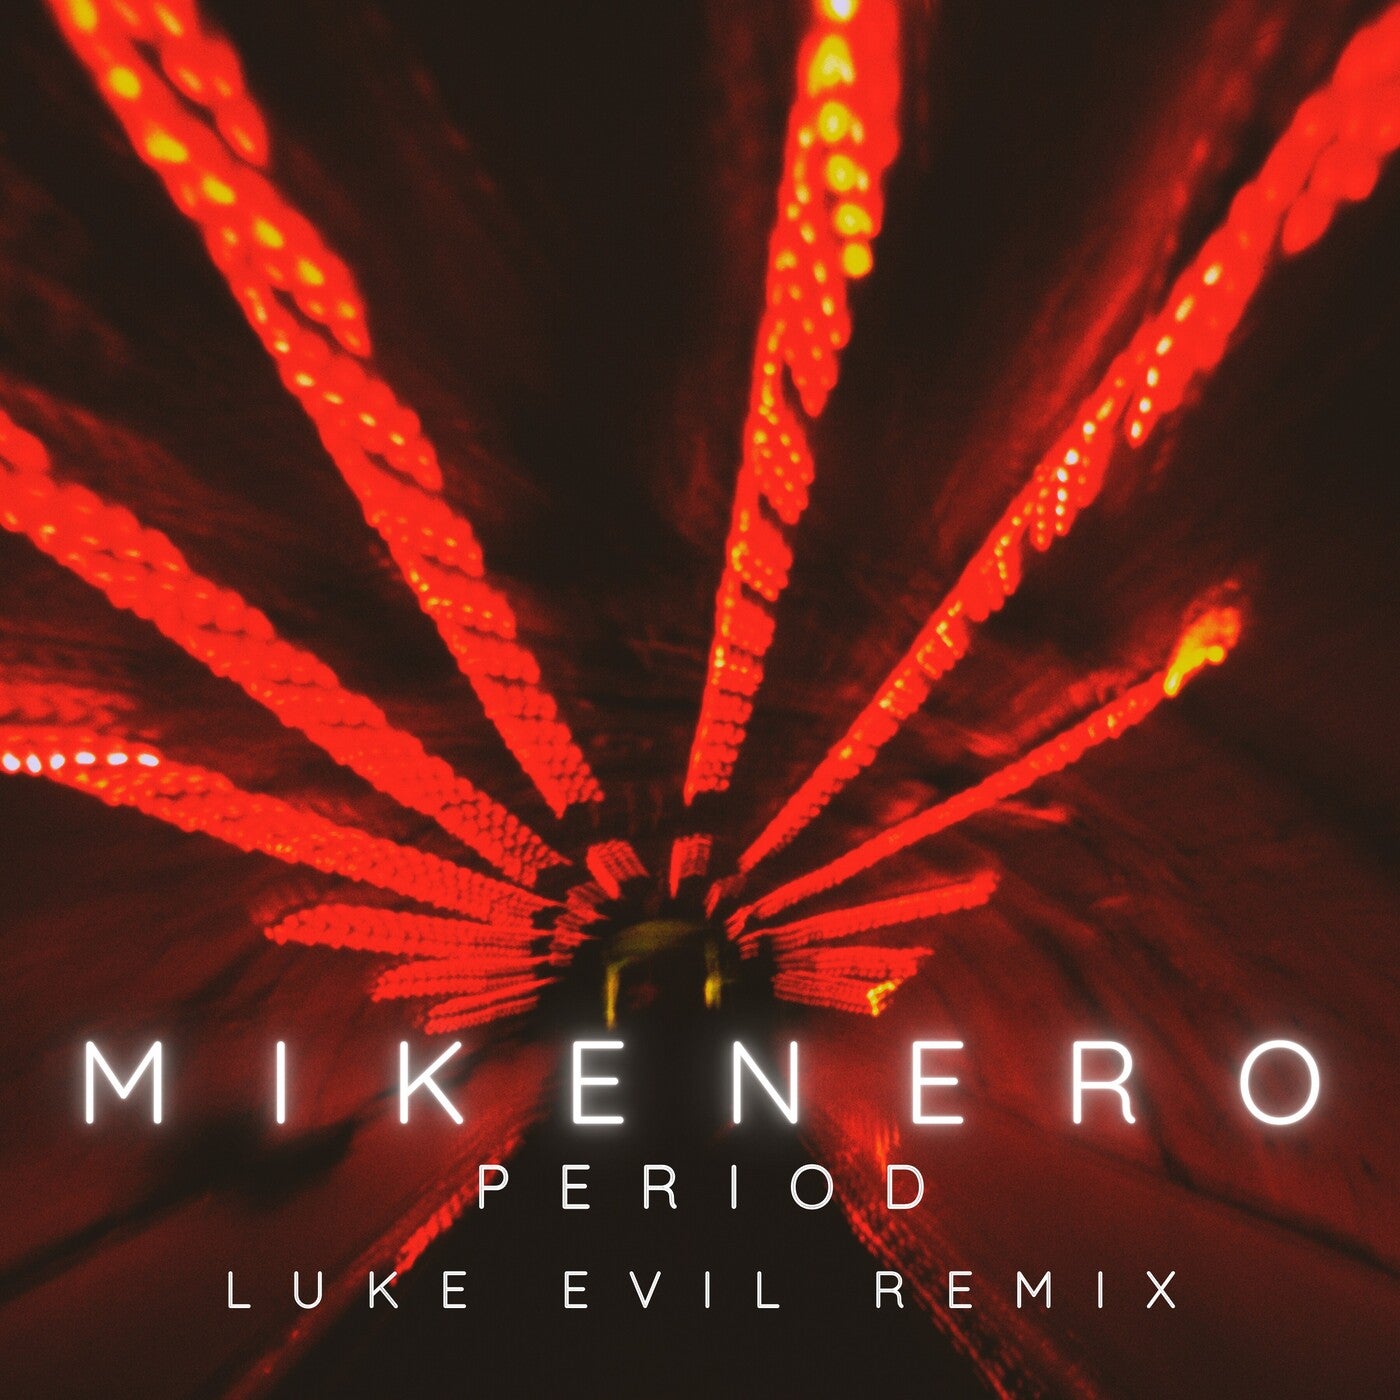 Period (Luke Evil Remix)